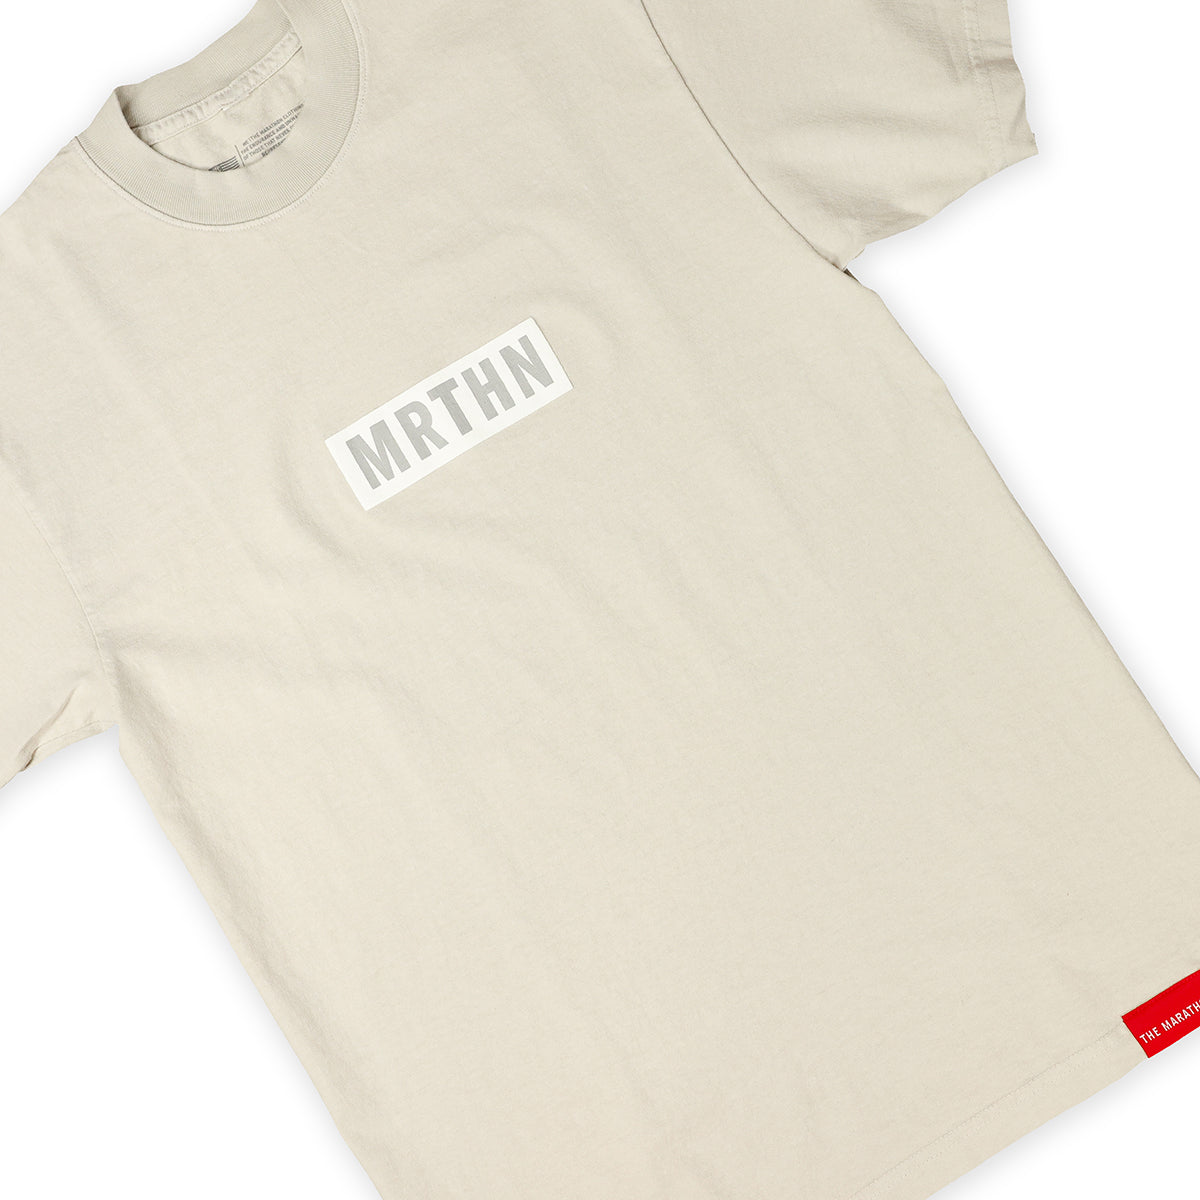 MRTHN T-shirt - Heather Grey/White - Detail